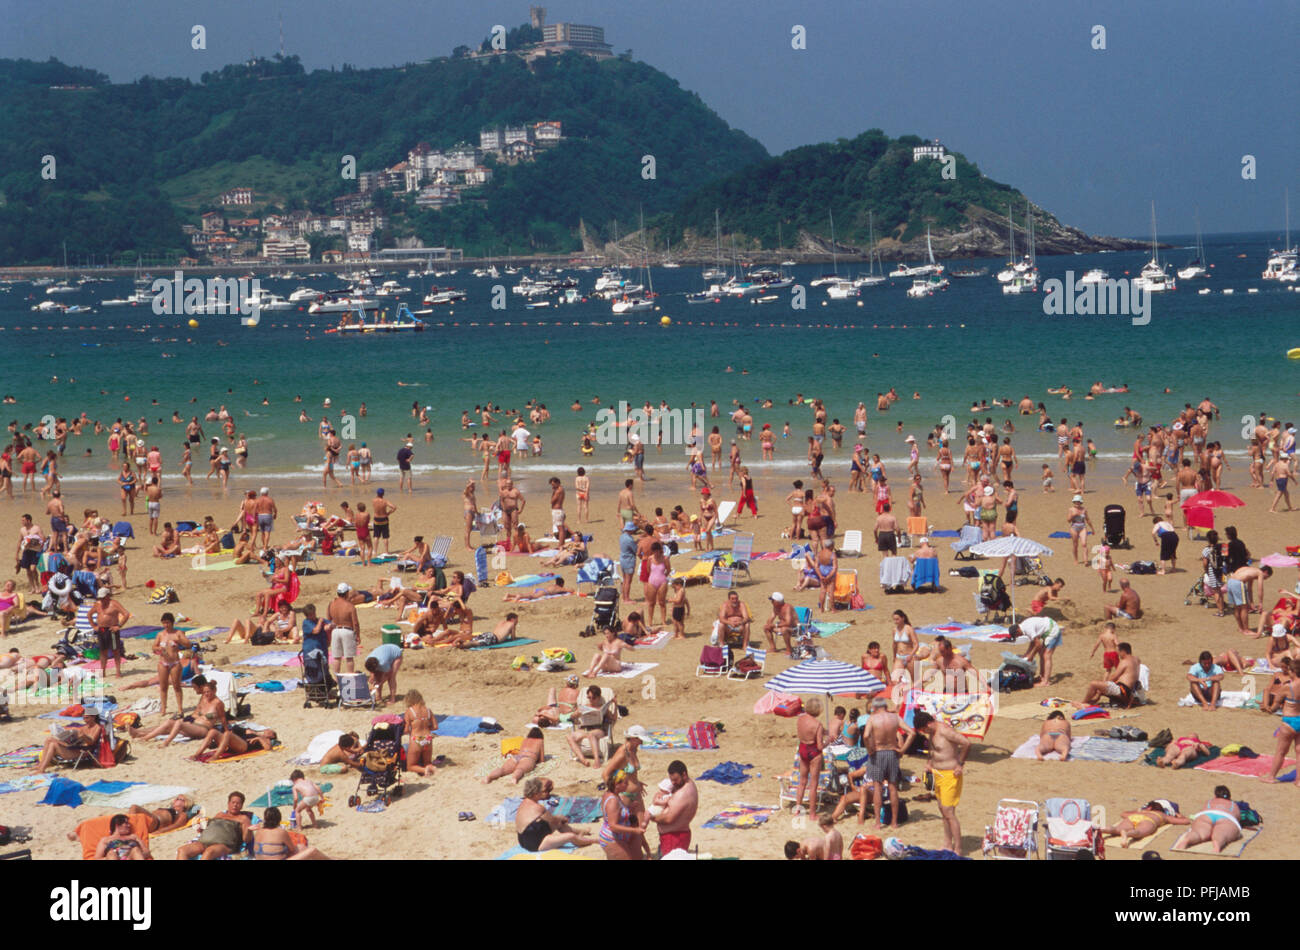 Europe, Spain, Northern Spain, San Sebastian, La Concha, sandy bay full of sunbathers, swimmers and boats in sea Stock Photo